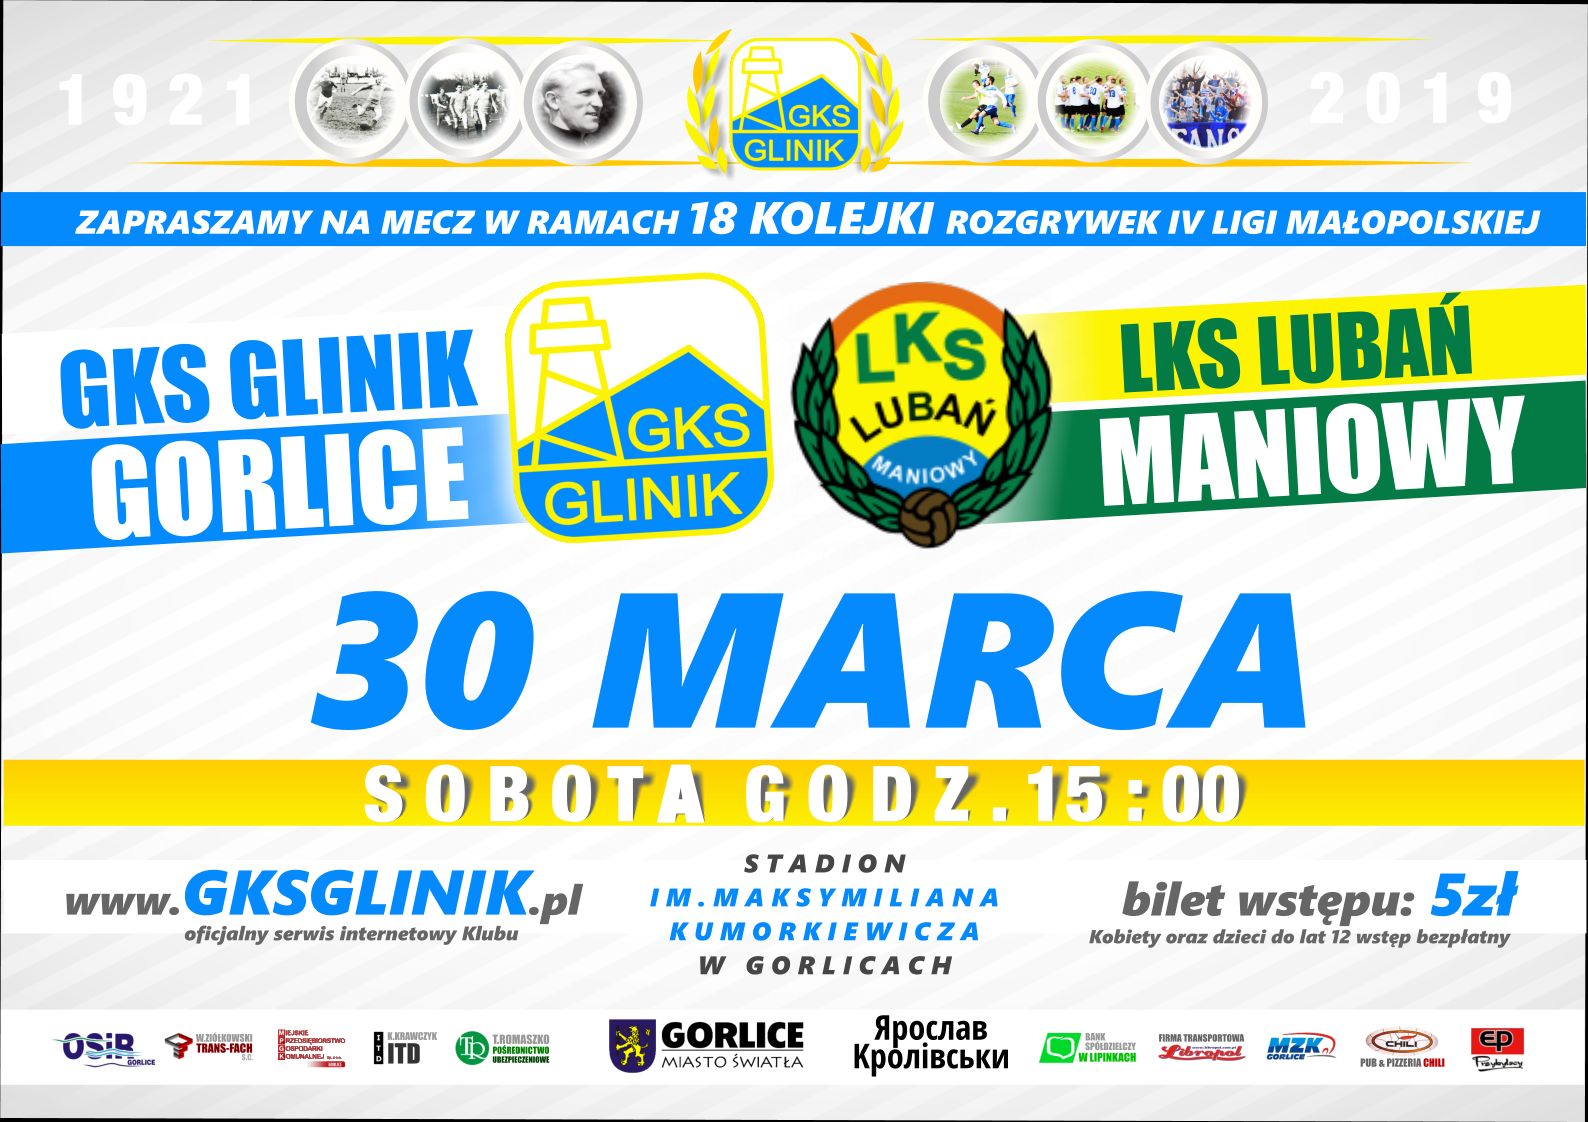 GKS Glinik Gorlice & LKS Lubań Maniowy